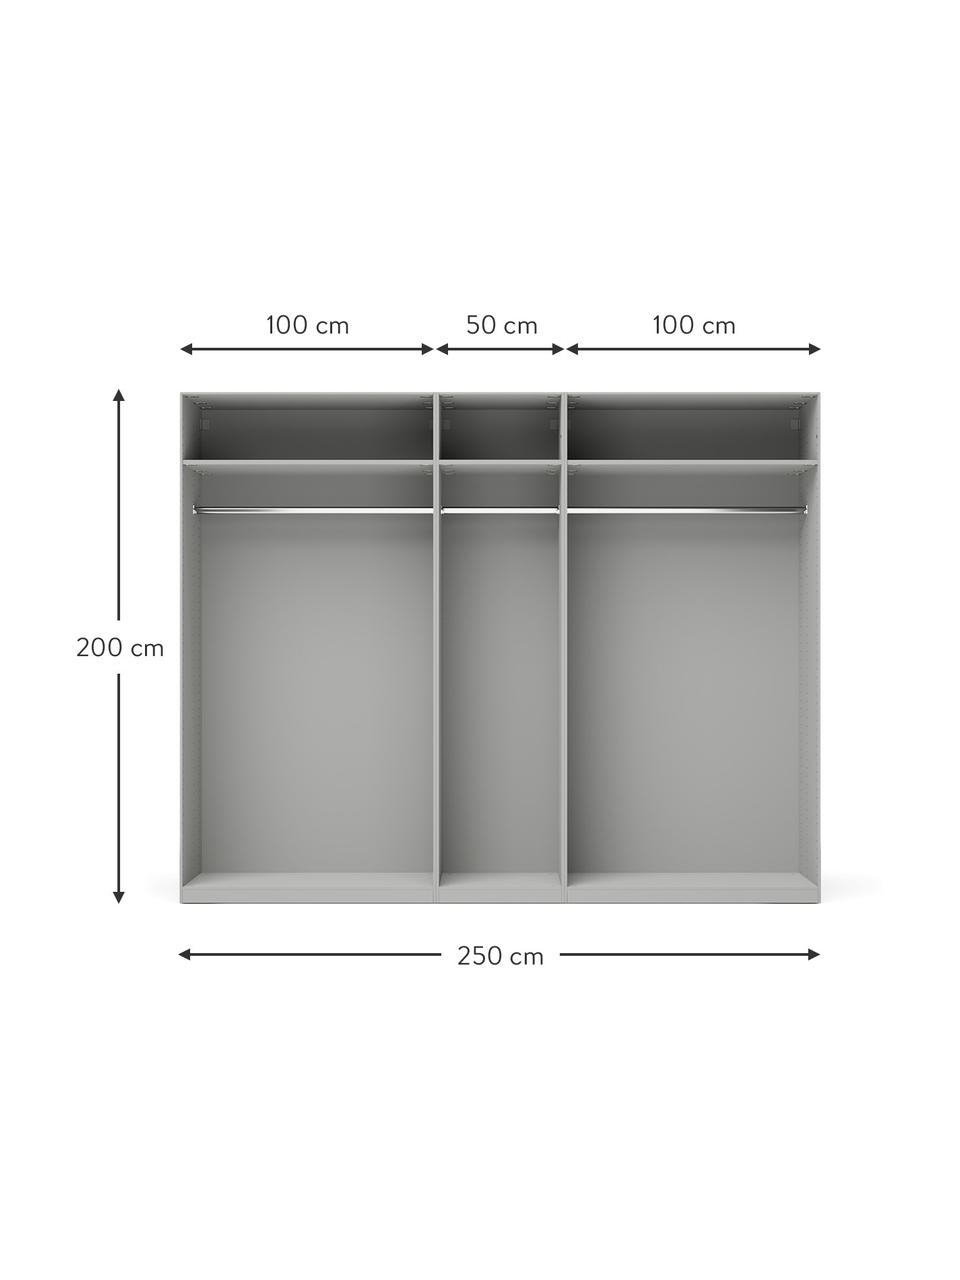 Modulární skříň s otočnými dveřmi Charlotte, šířka 250 cm, více variant, Šedá, Interiér Basic, V 200 cm